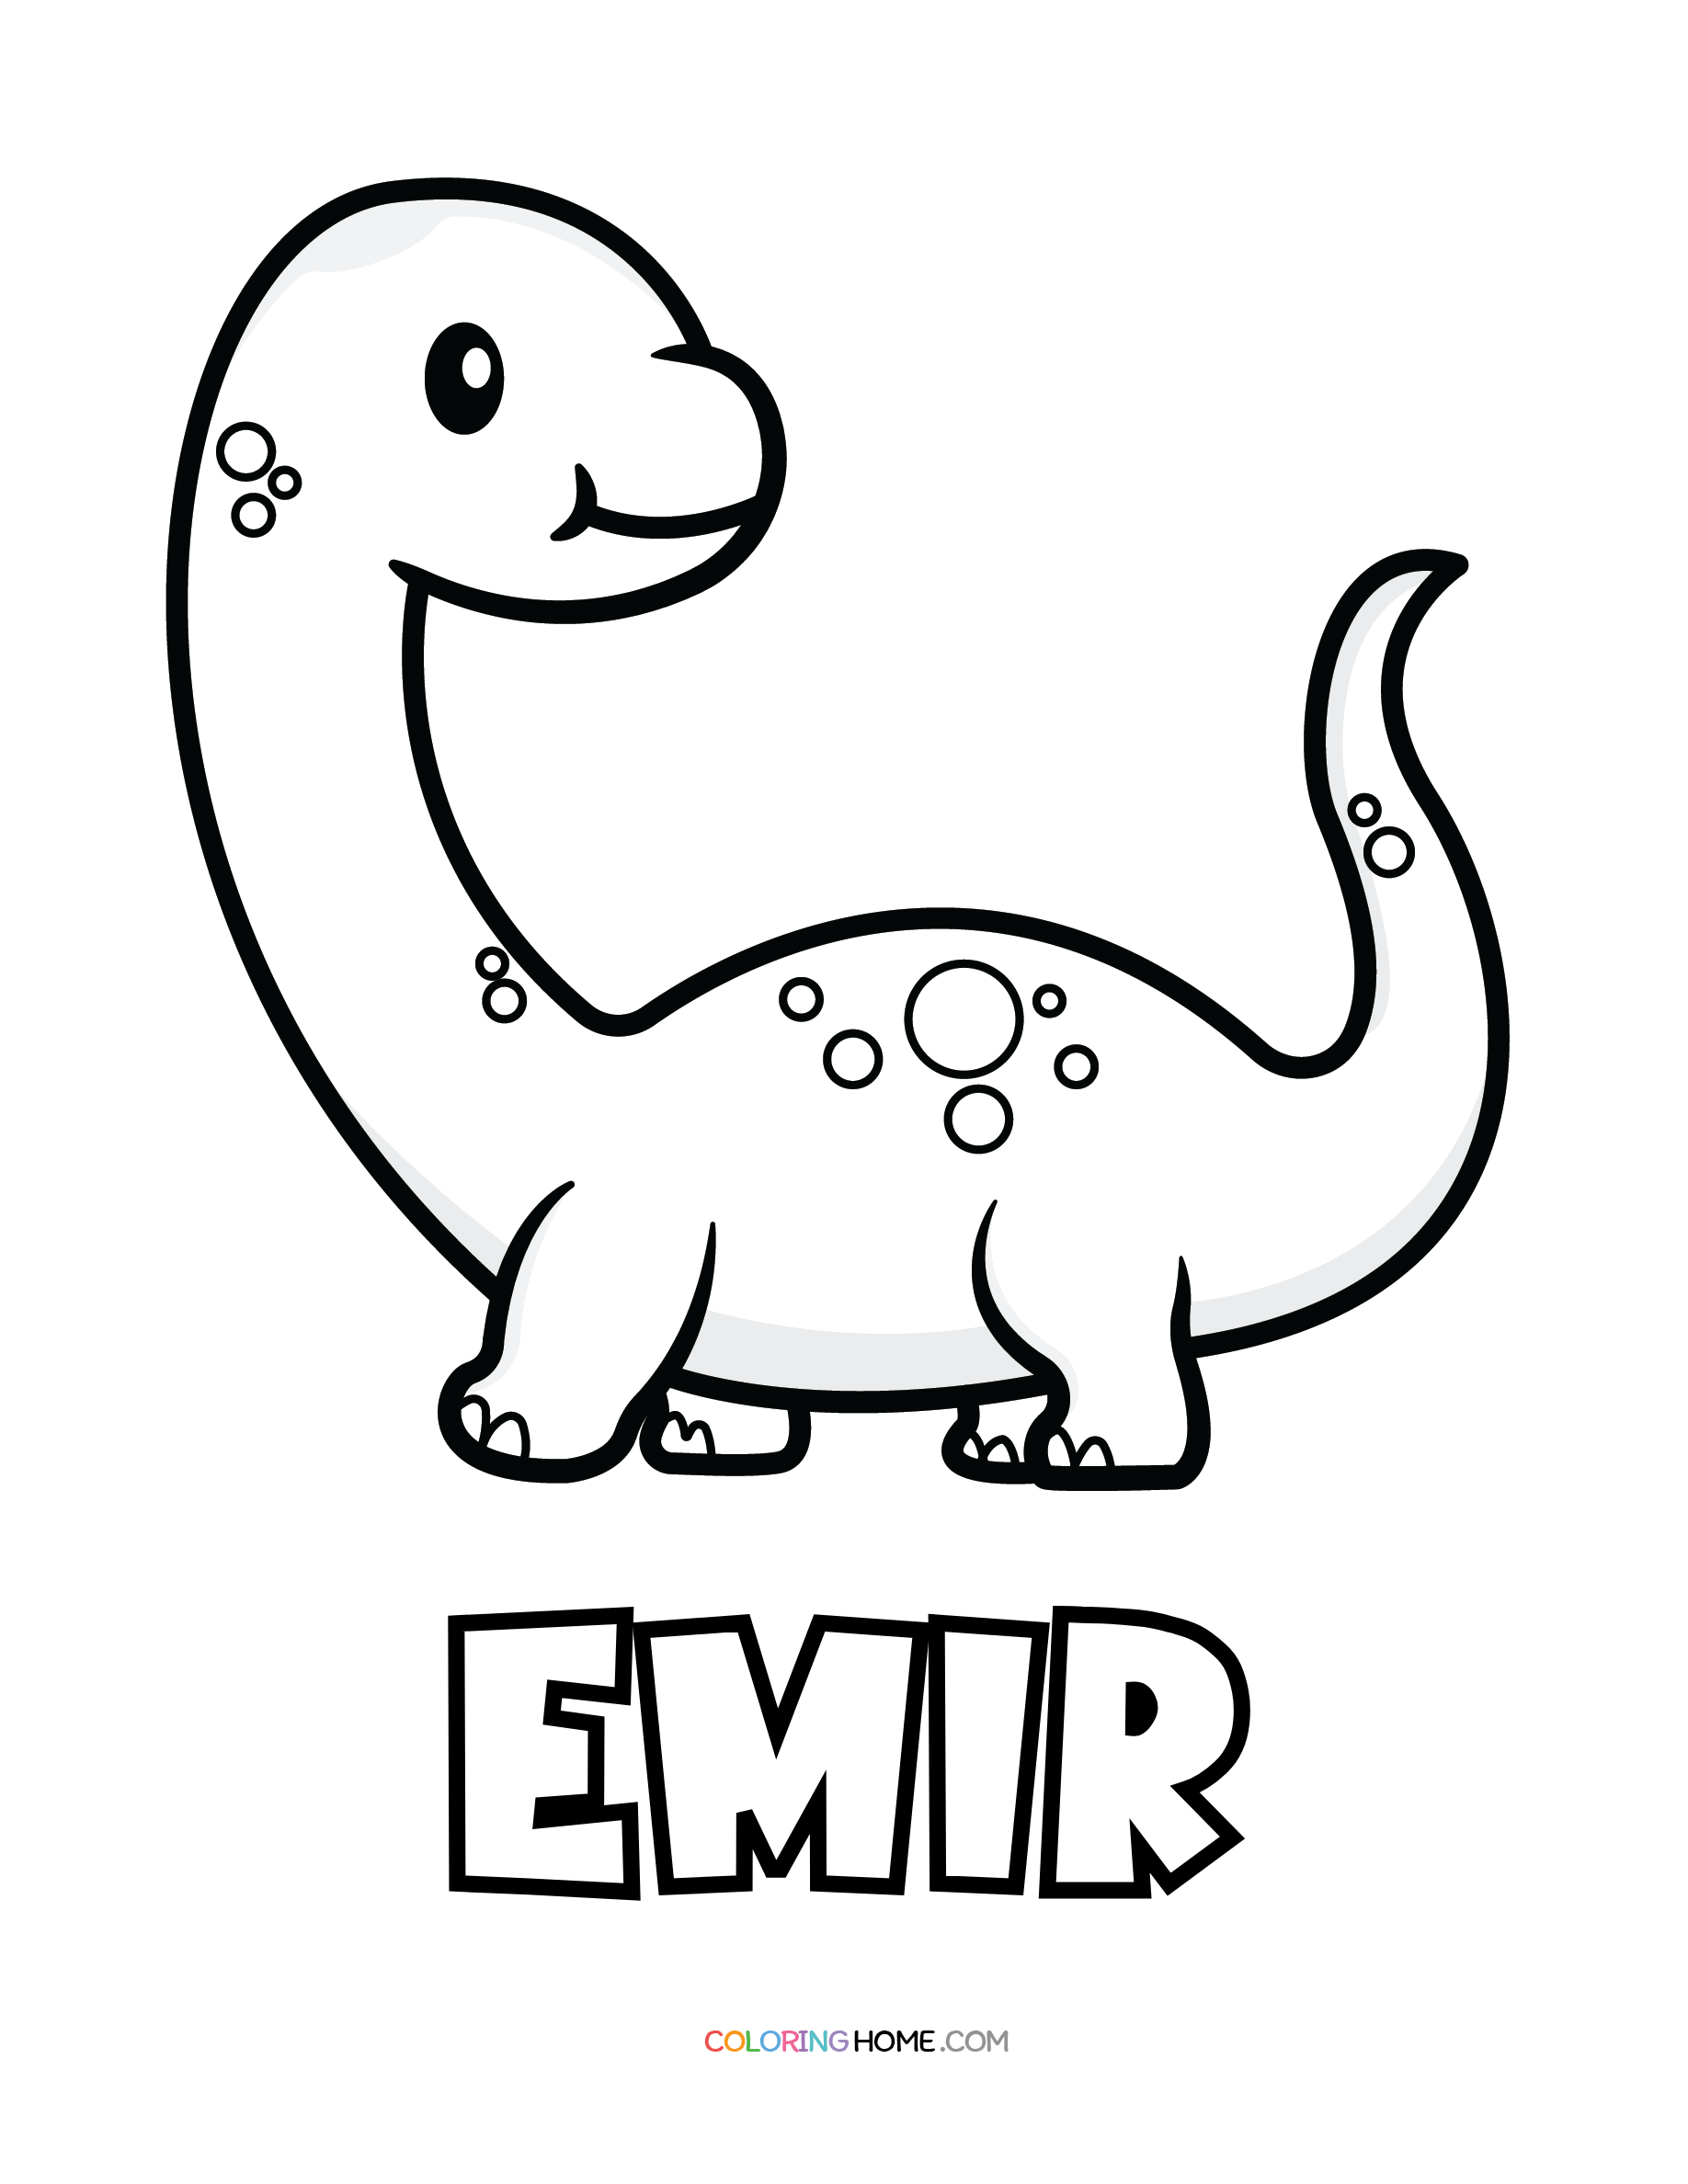 Emir dinosaur coloring page